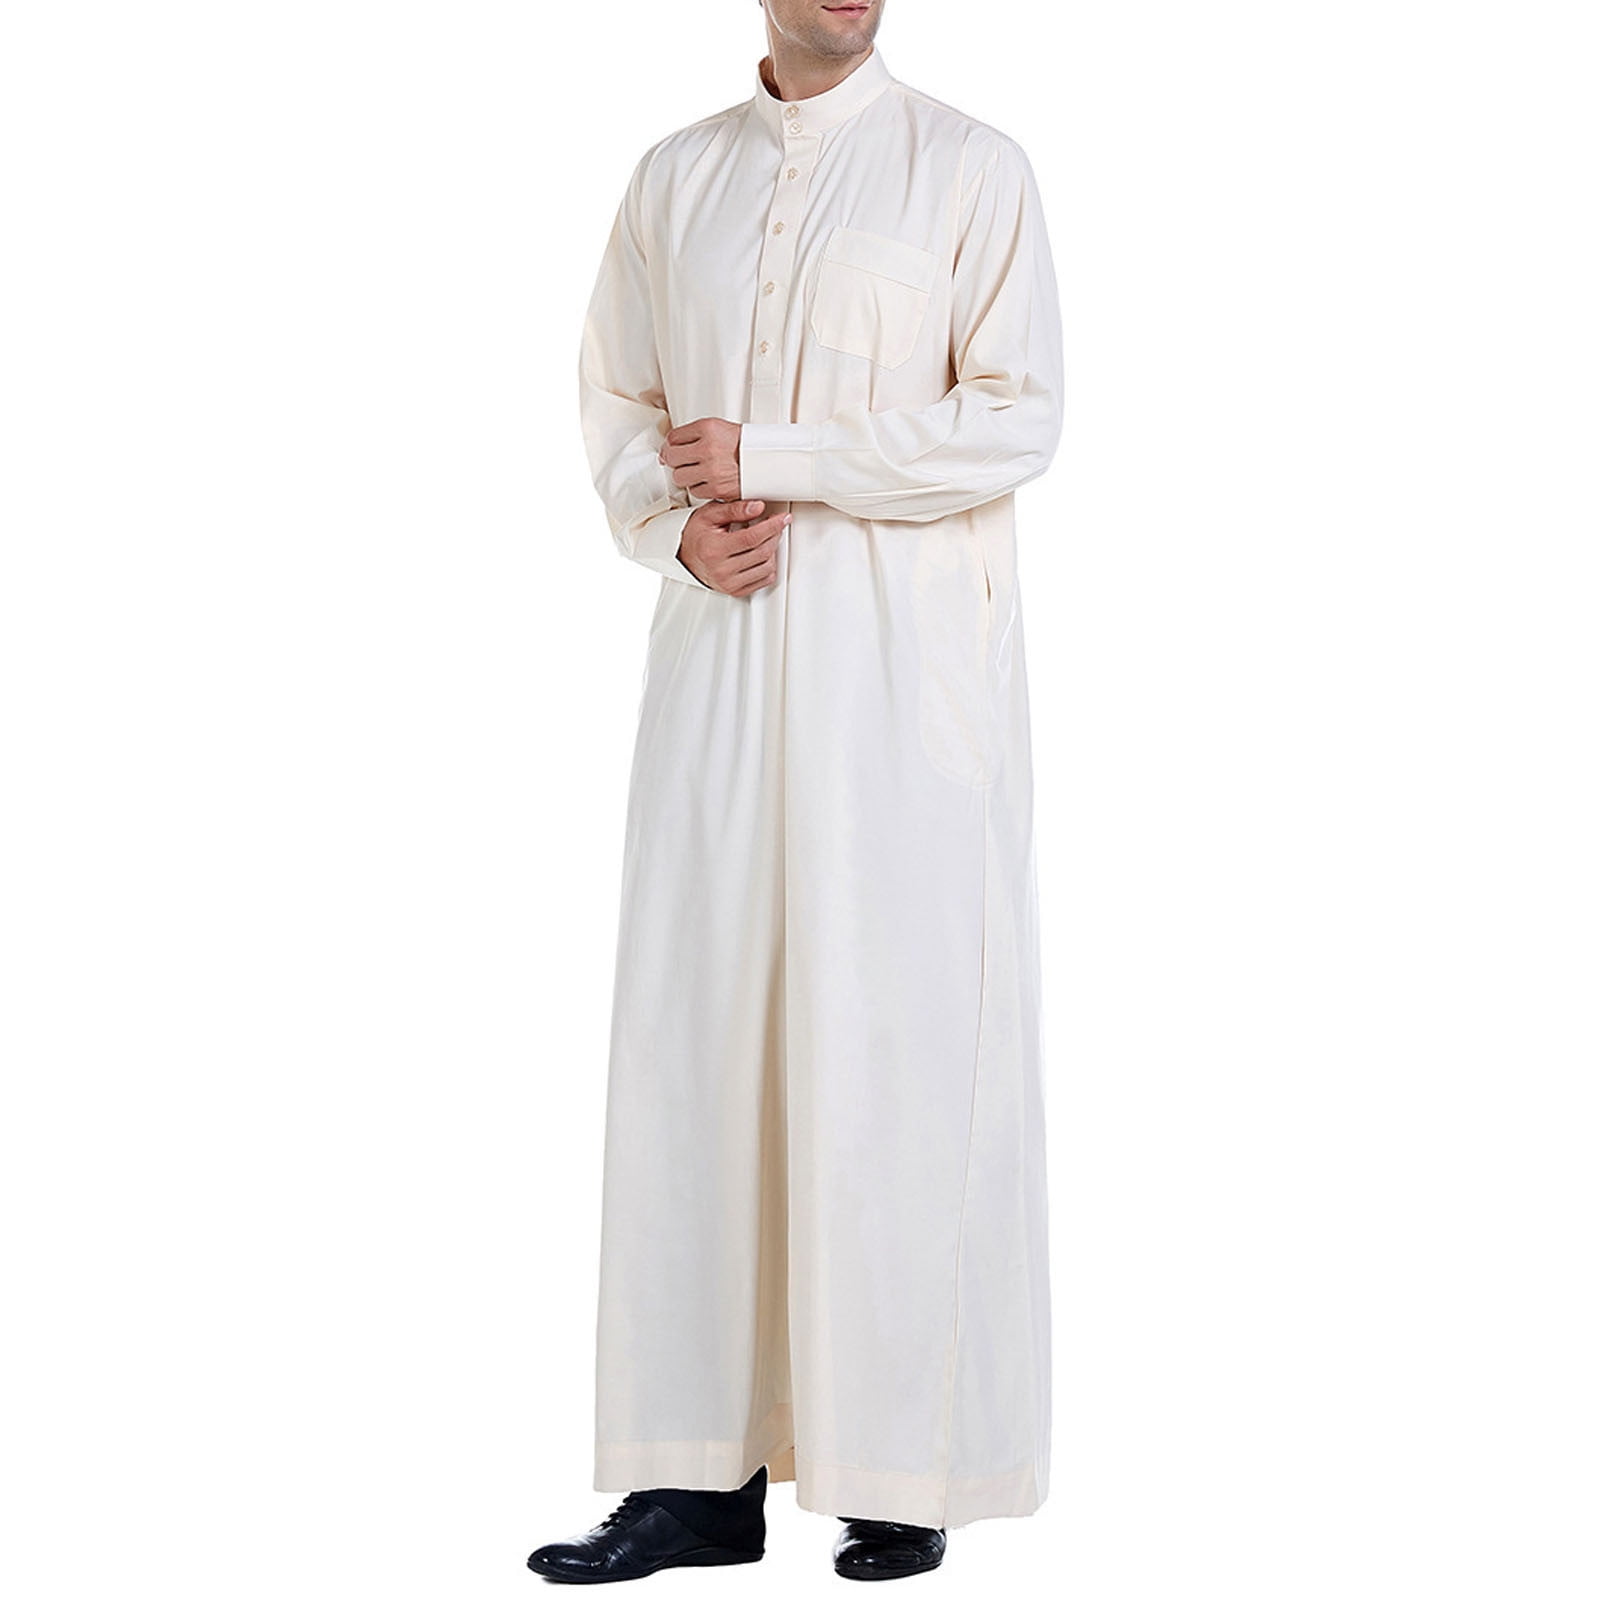 Portrait of a Confident Arab Man Welcoming and Wearing UAE Traditional Dress  UAE EMIRATI CONFIDENT Stock Photo - Image of emirati, eyes: 145610234